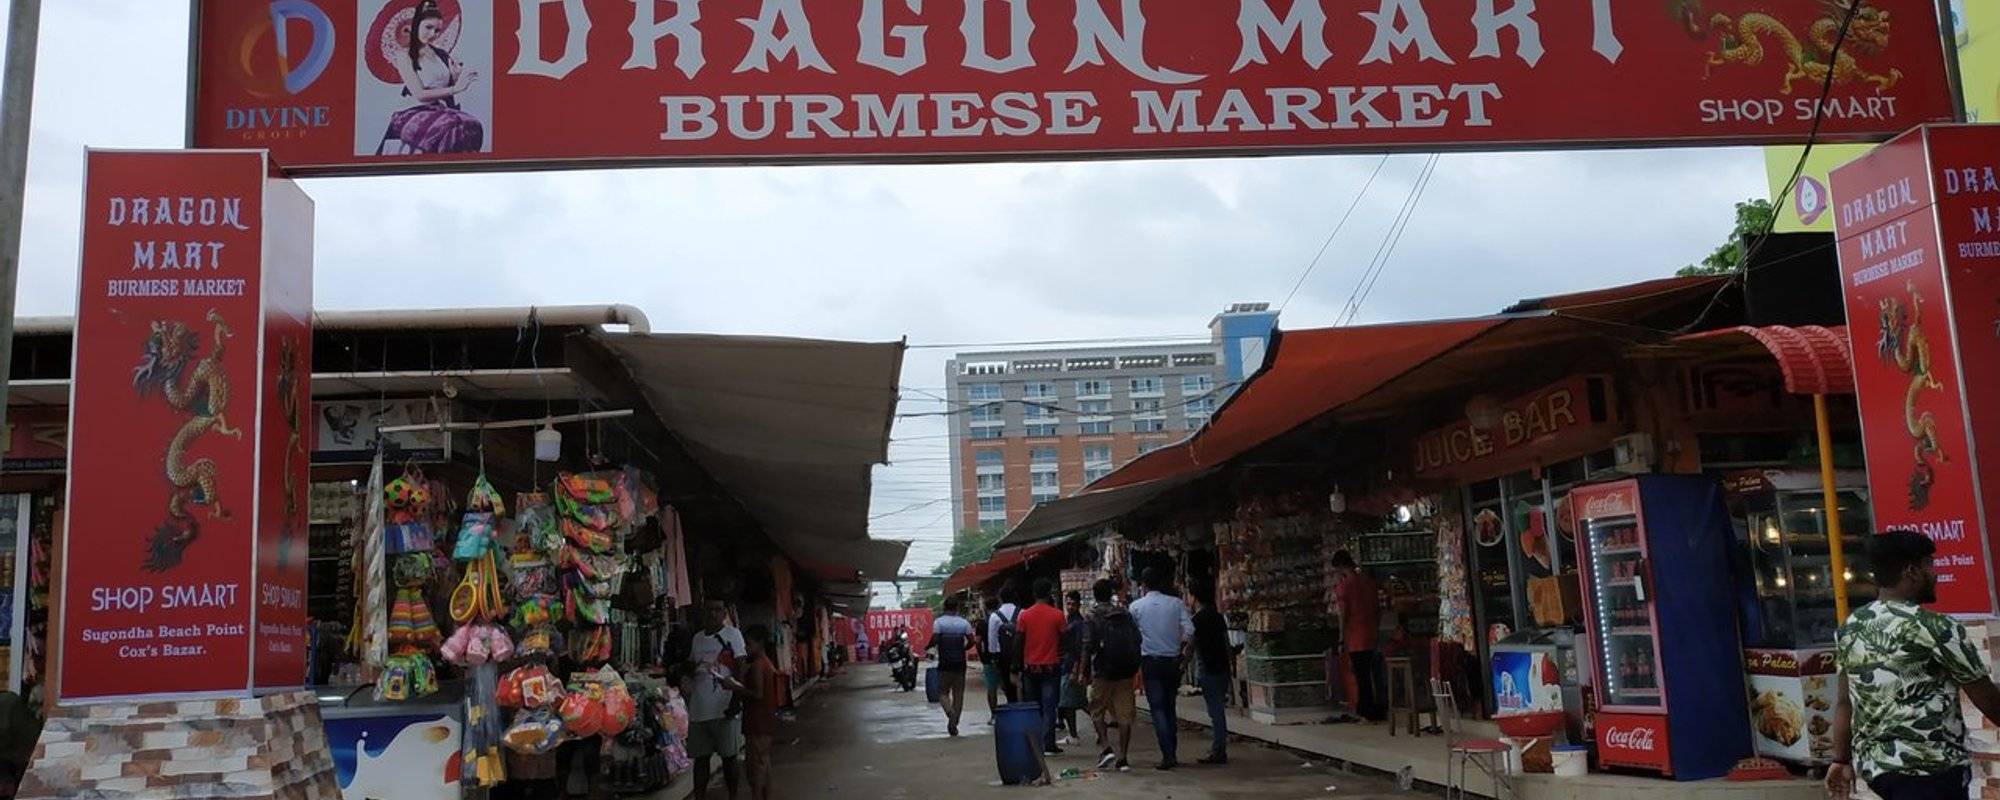 My Travel Feed of Burmese Market, Cox's Bazar, Bangladesh.